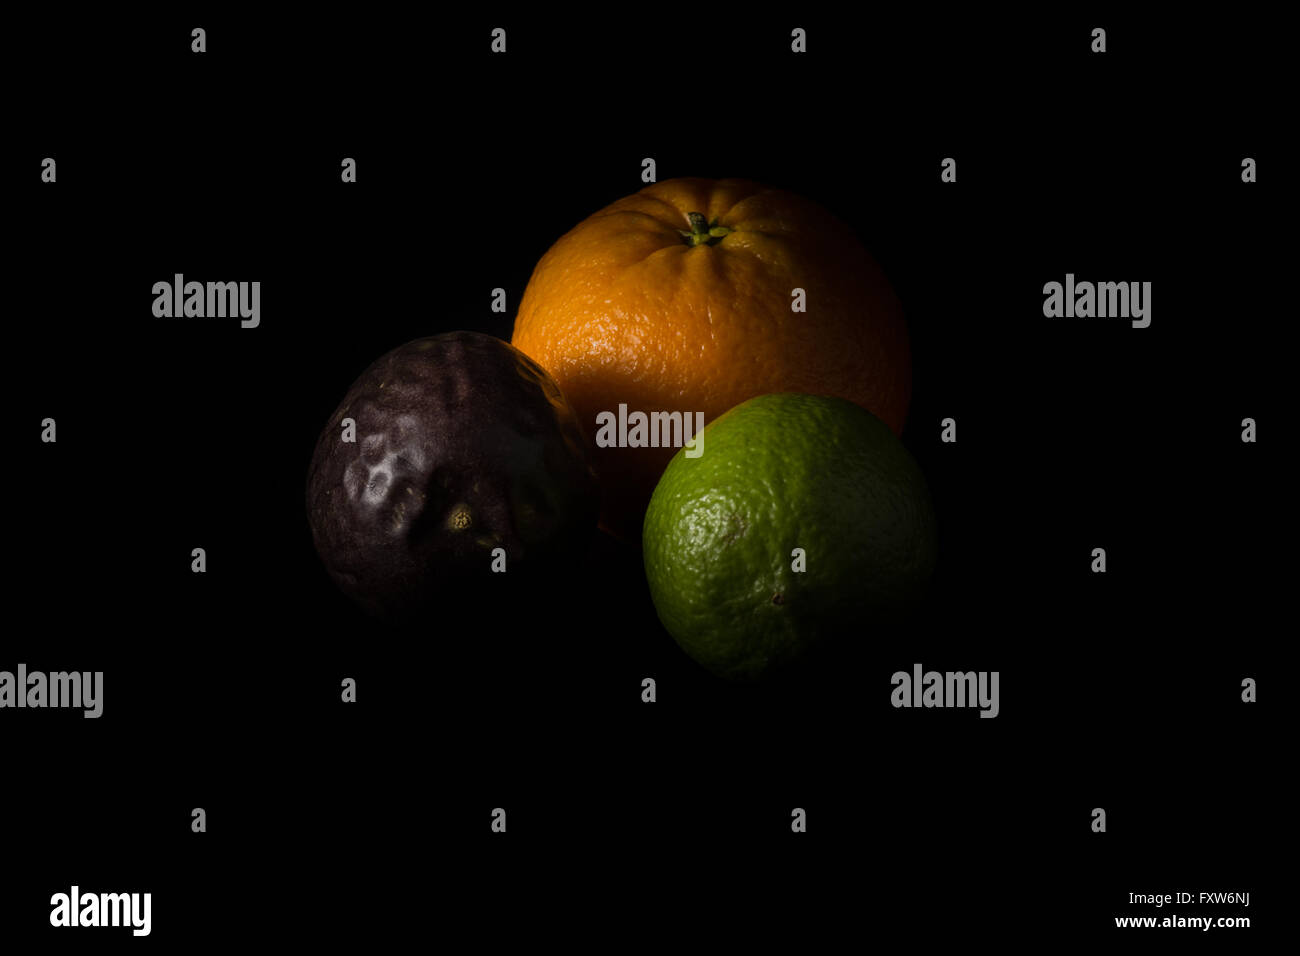 Orange, passion fruit and lime low key image Stock Photo